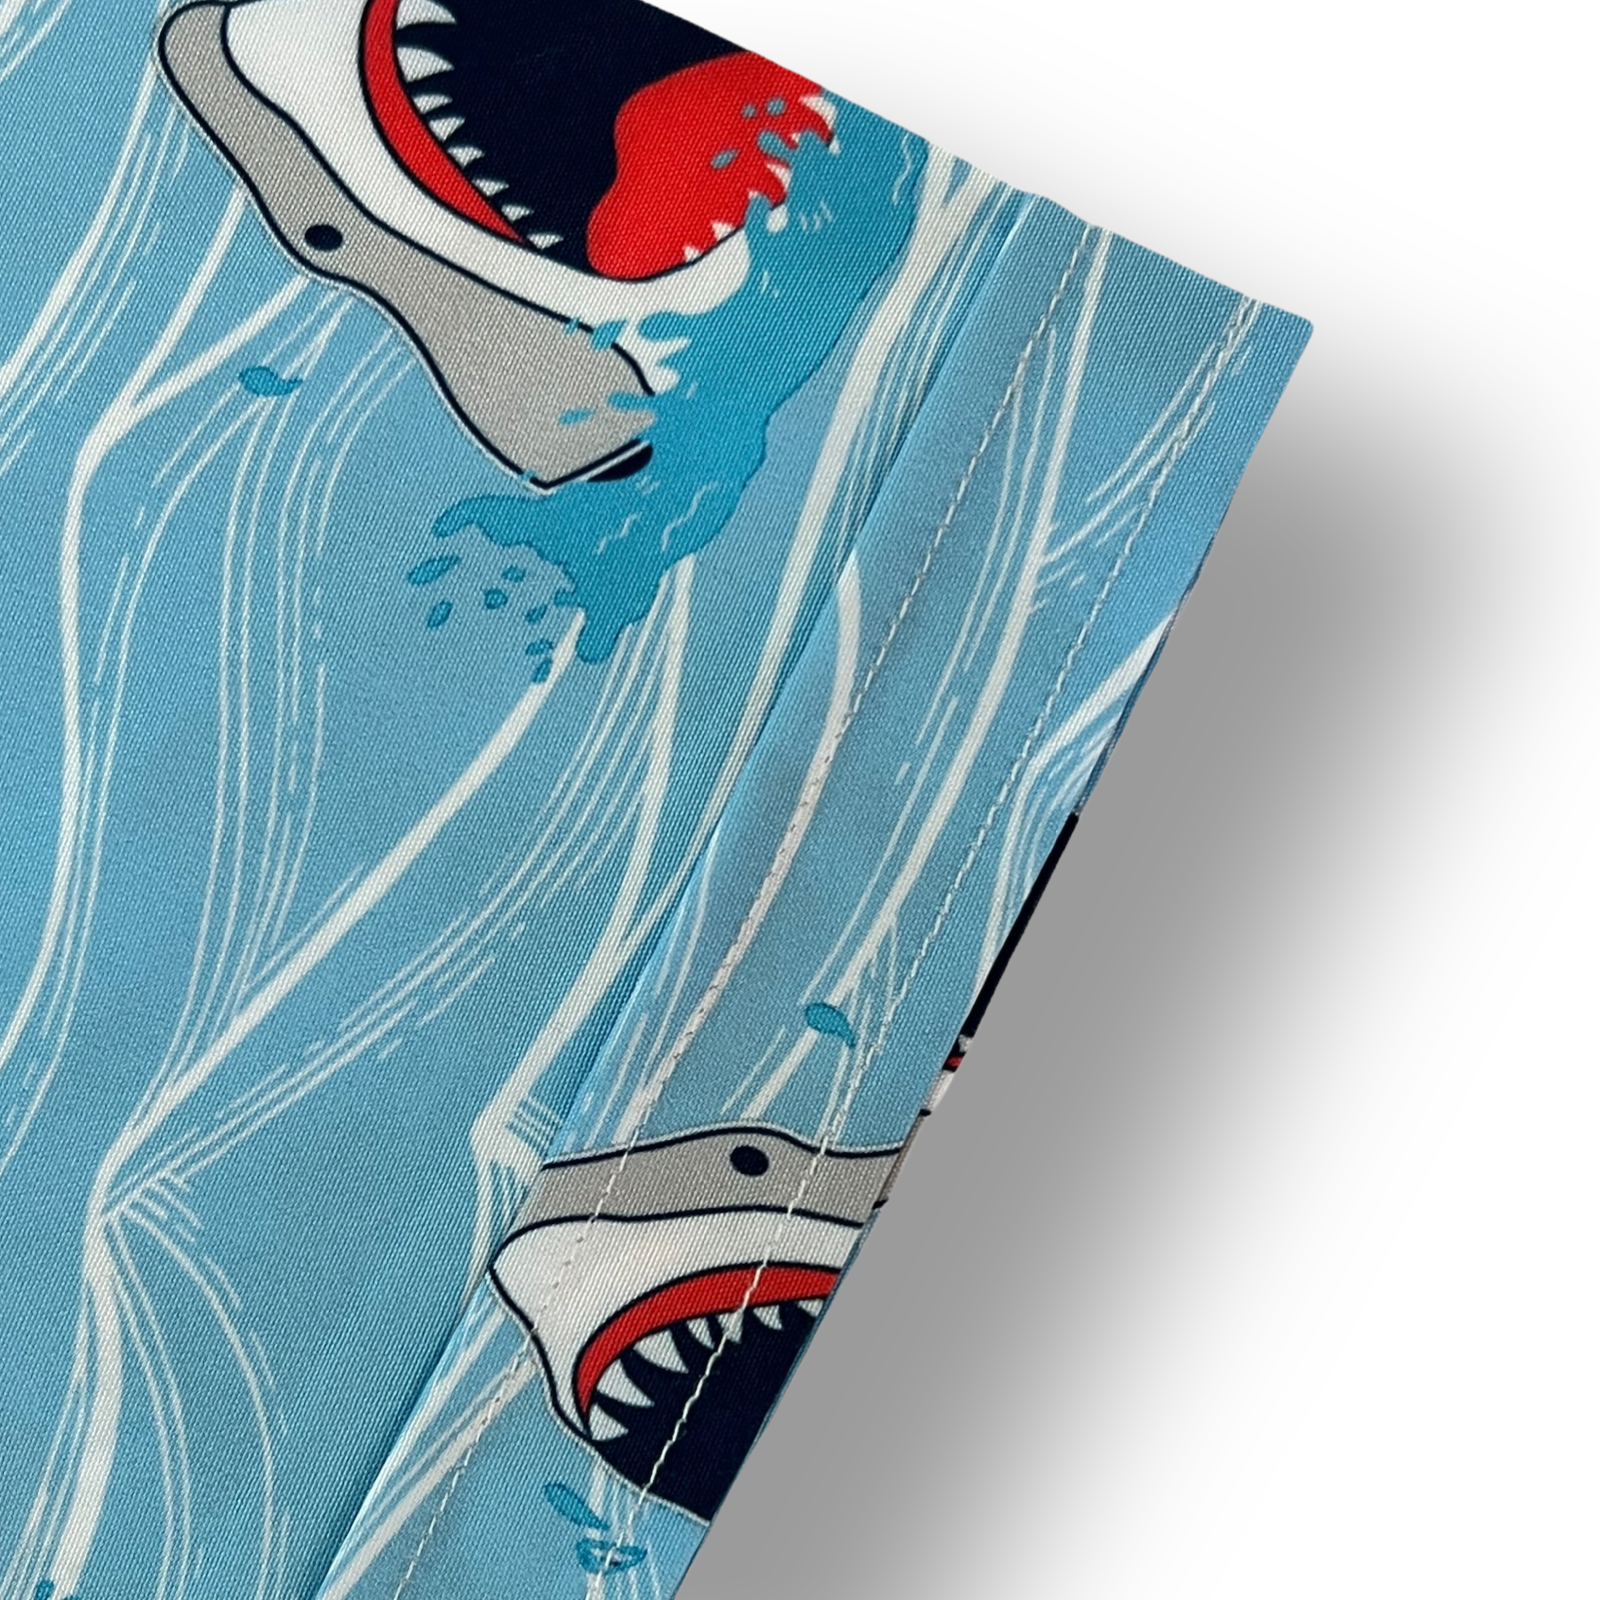 Shark Bait Party Shirt